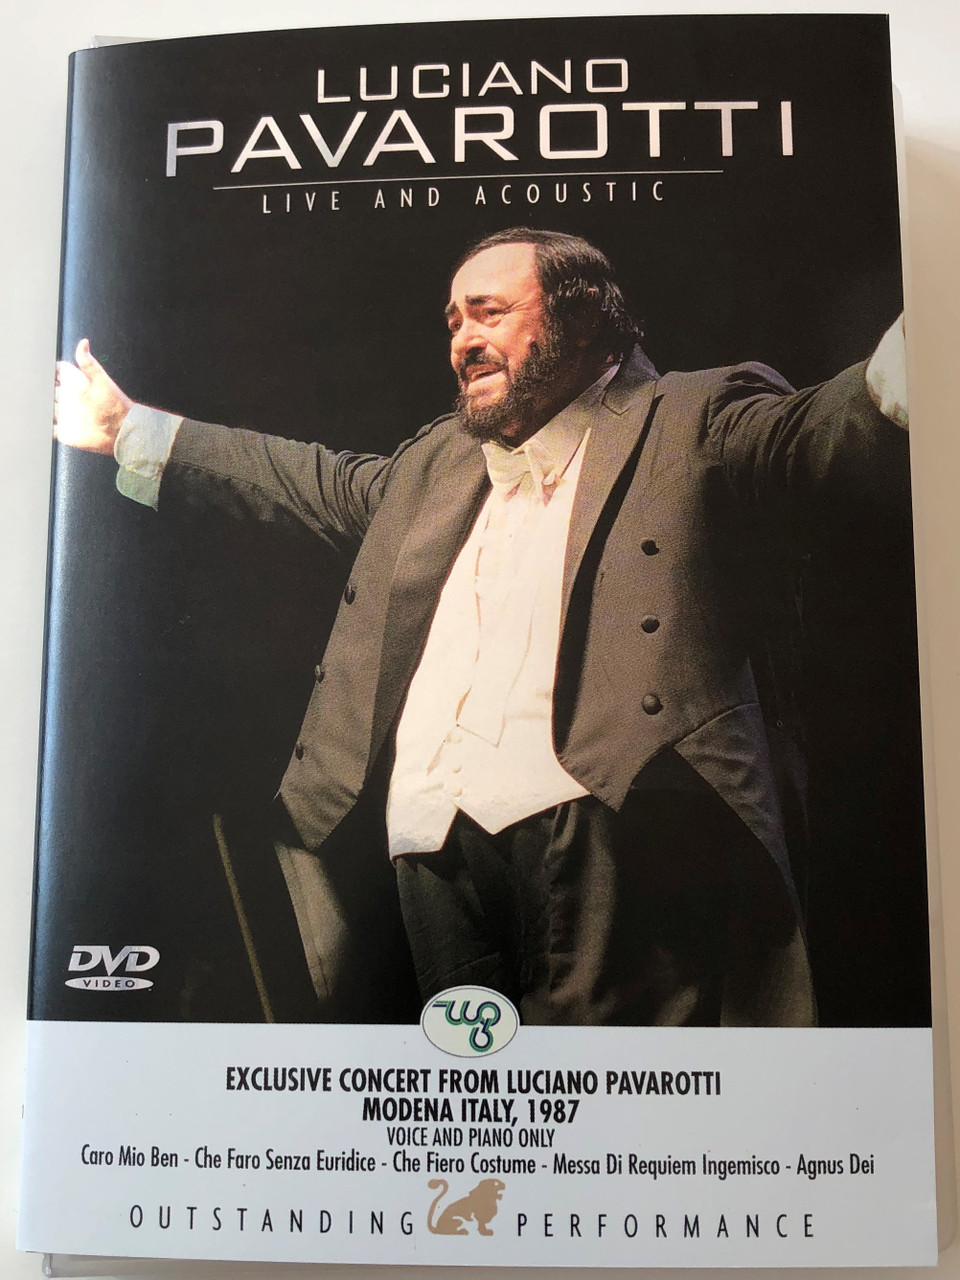 Luciano Pavarotti Live and Acoustic DVD 2005 Exclusive Concert Modena Italy  1987 - Voice and Piano Only / Caro Mio Ben, Agnus Dei, La Serenata, Luna  D'estate, Turandot Nessun Dorma / Weton-Wesgram / PERFORM 001 -  bibleinmylanguage